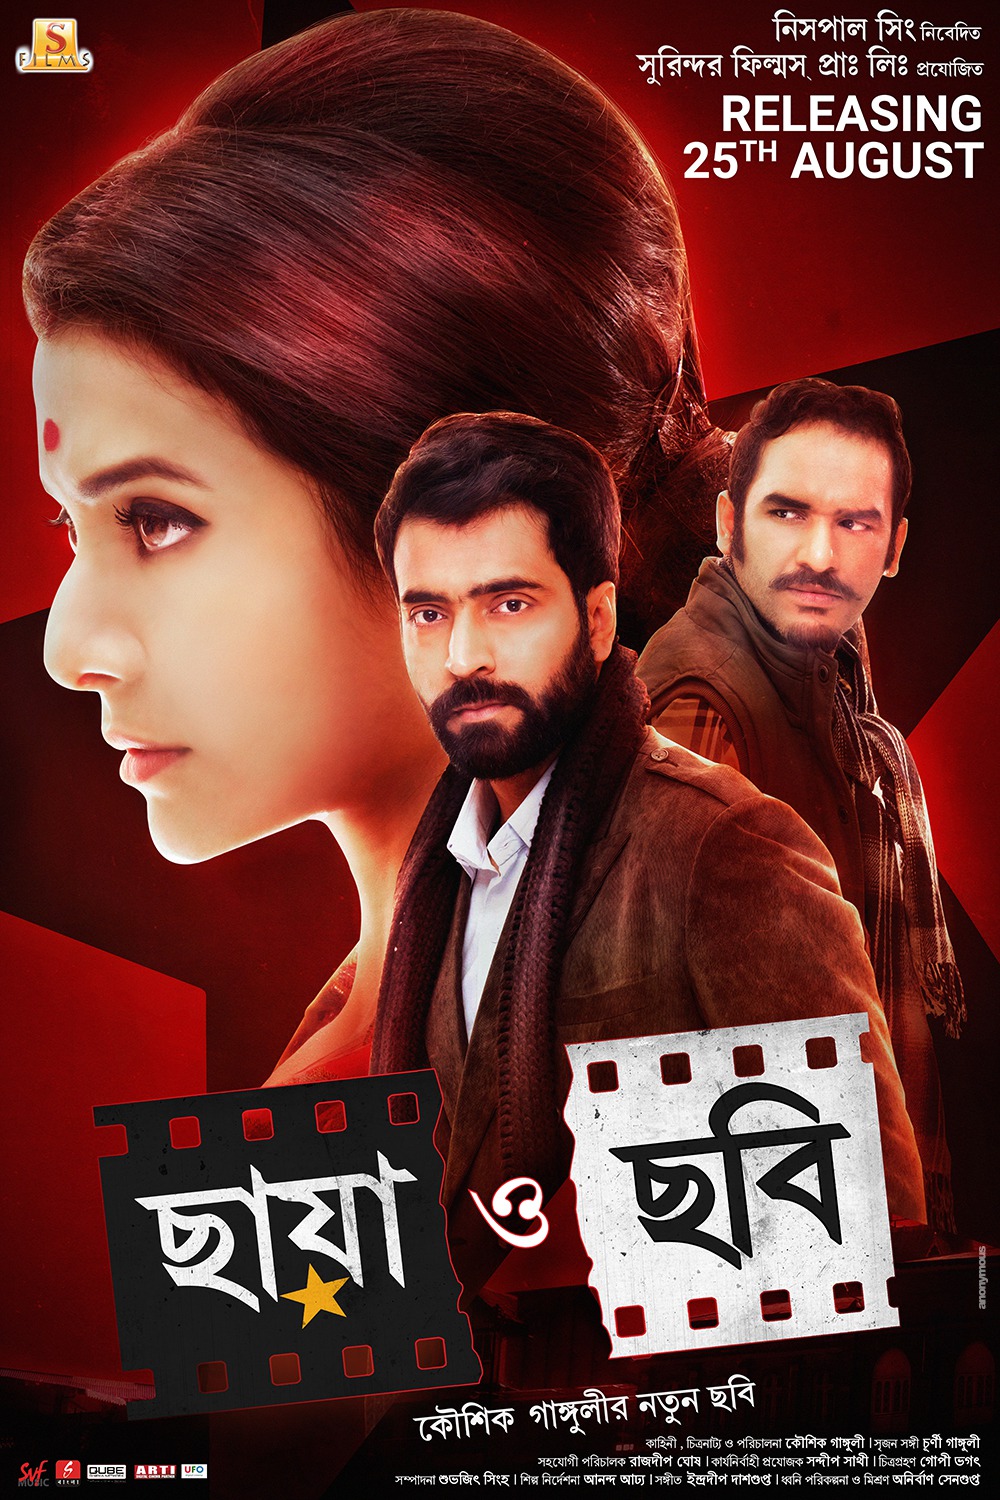 Extra Large Movie Poster Image for Chhaya O Chhobi (#4 of 4)